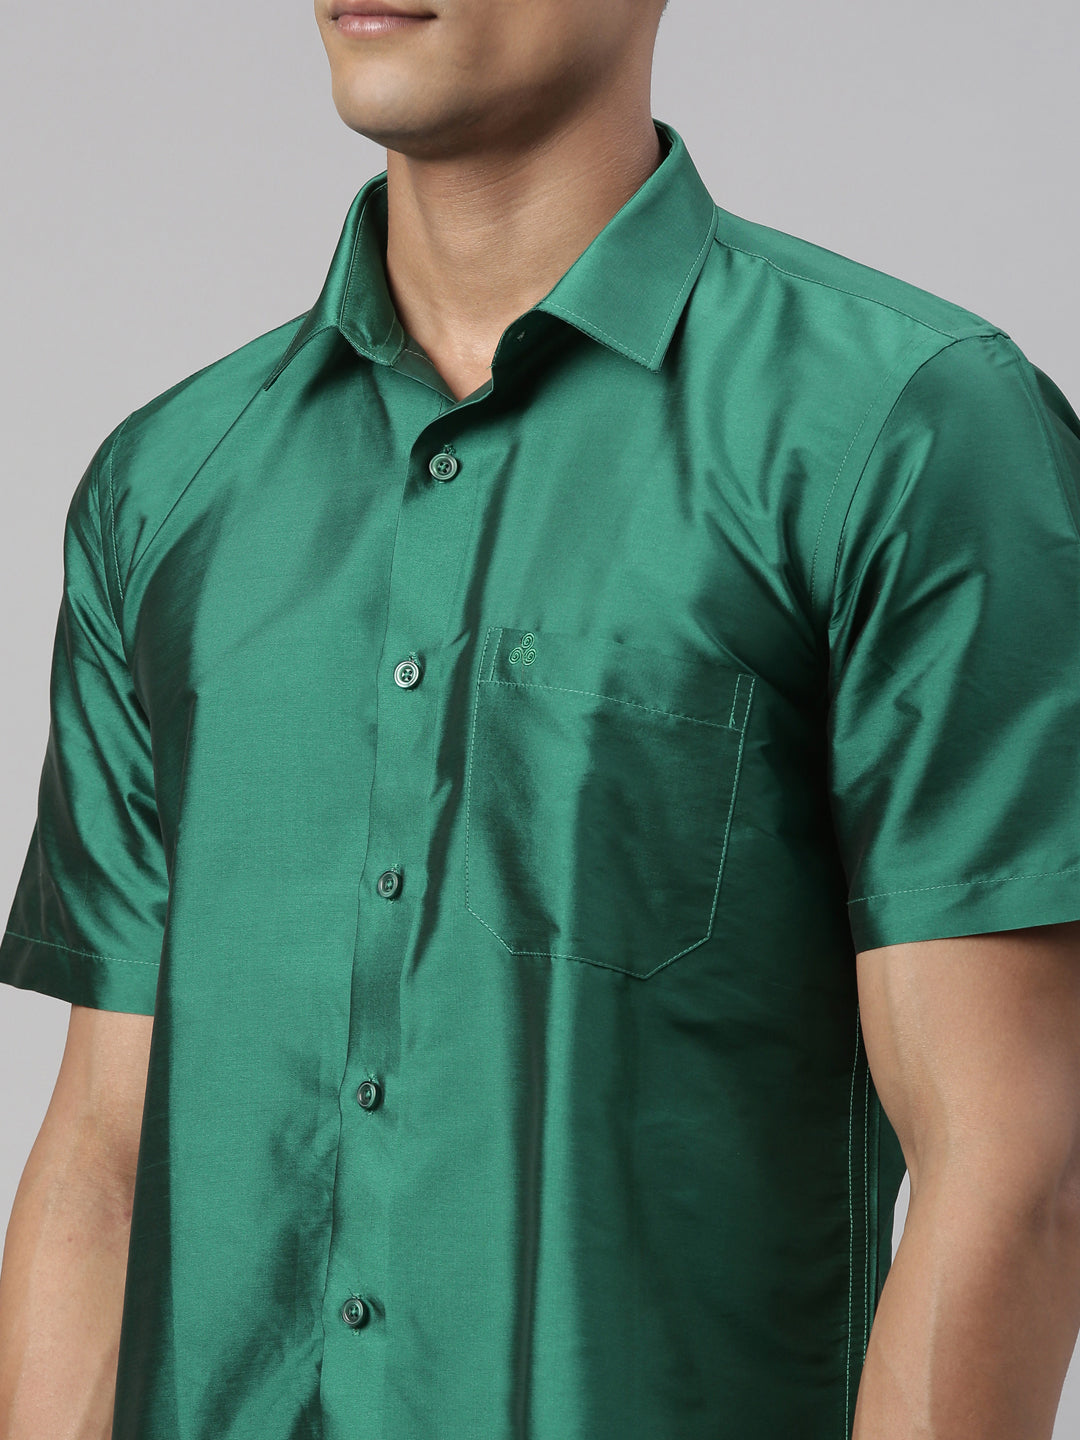 Tattva Mens Green Colour Half sleeve Shirt